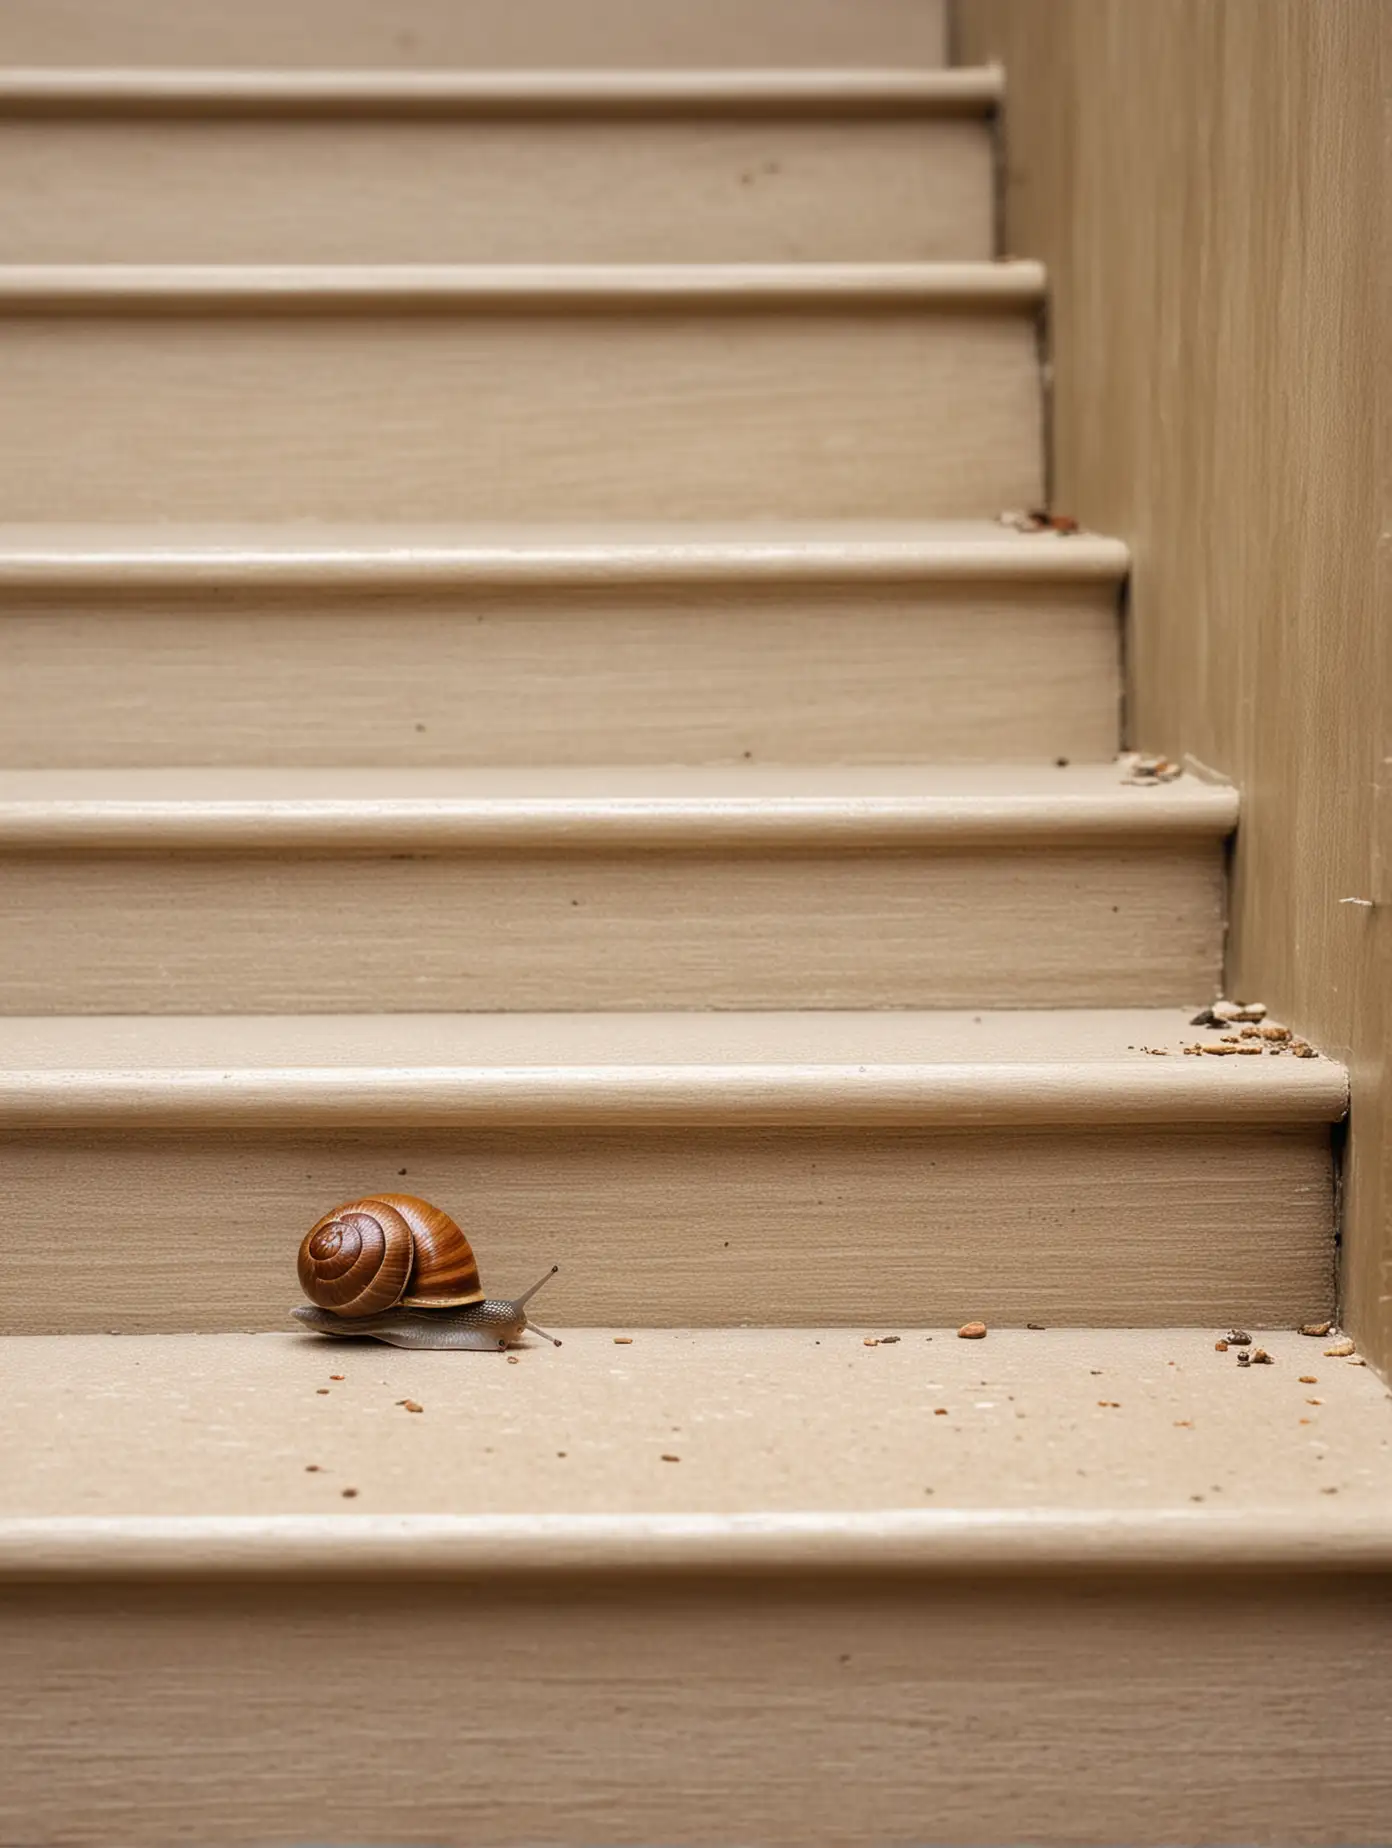  progressive snail climbing stairs